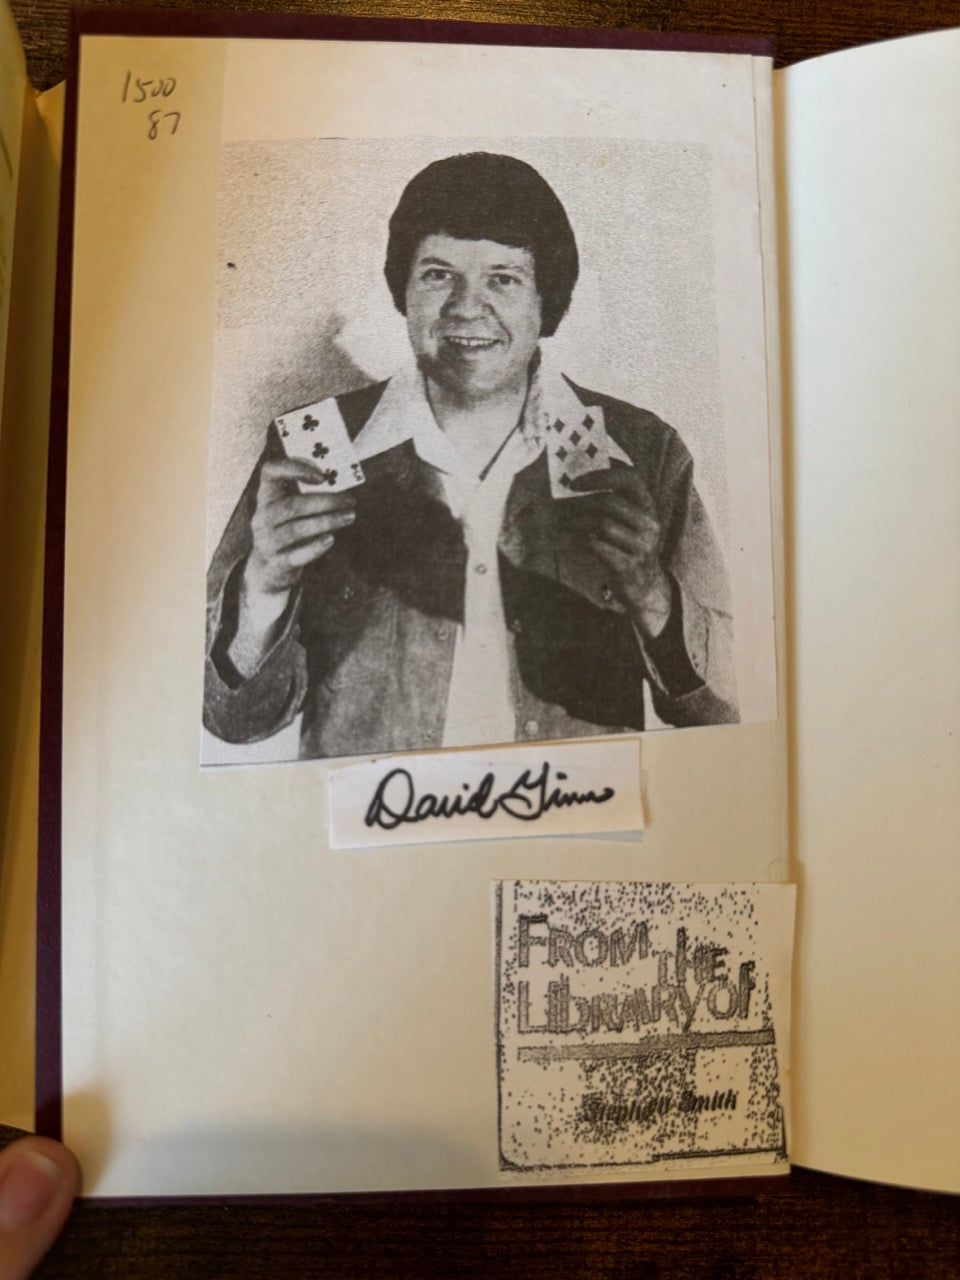 The Comedy Magic Textbook - David Roper